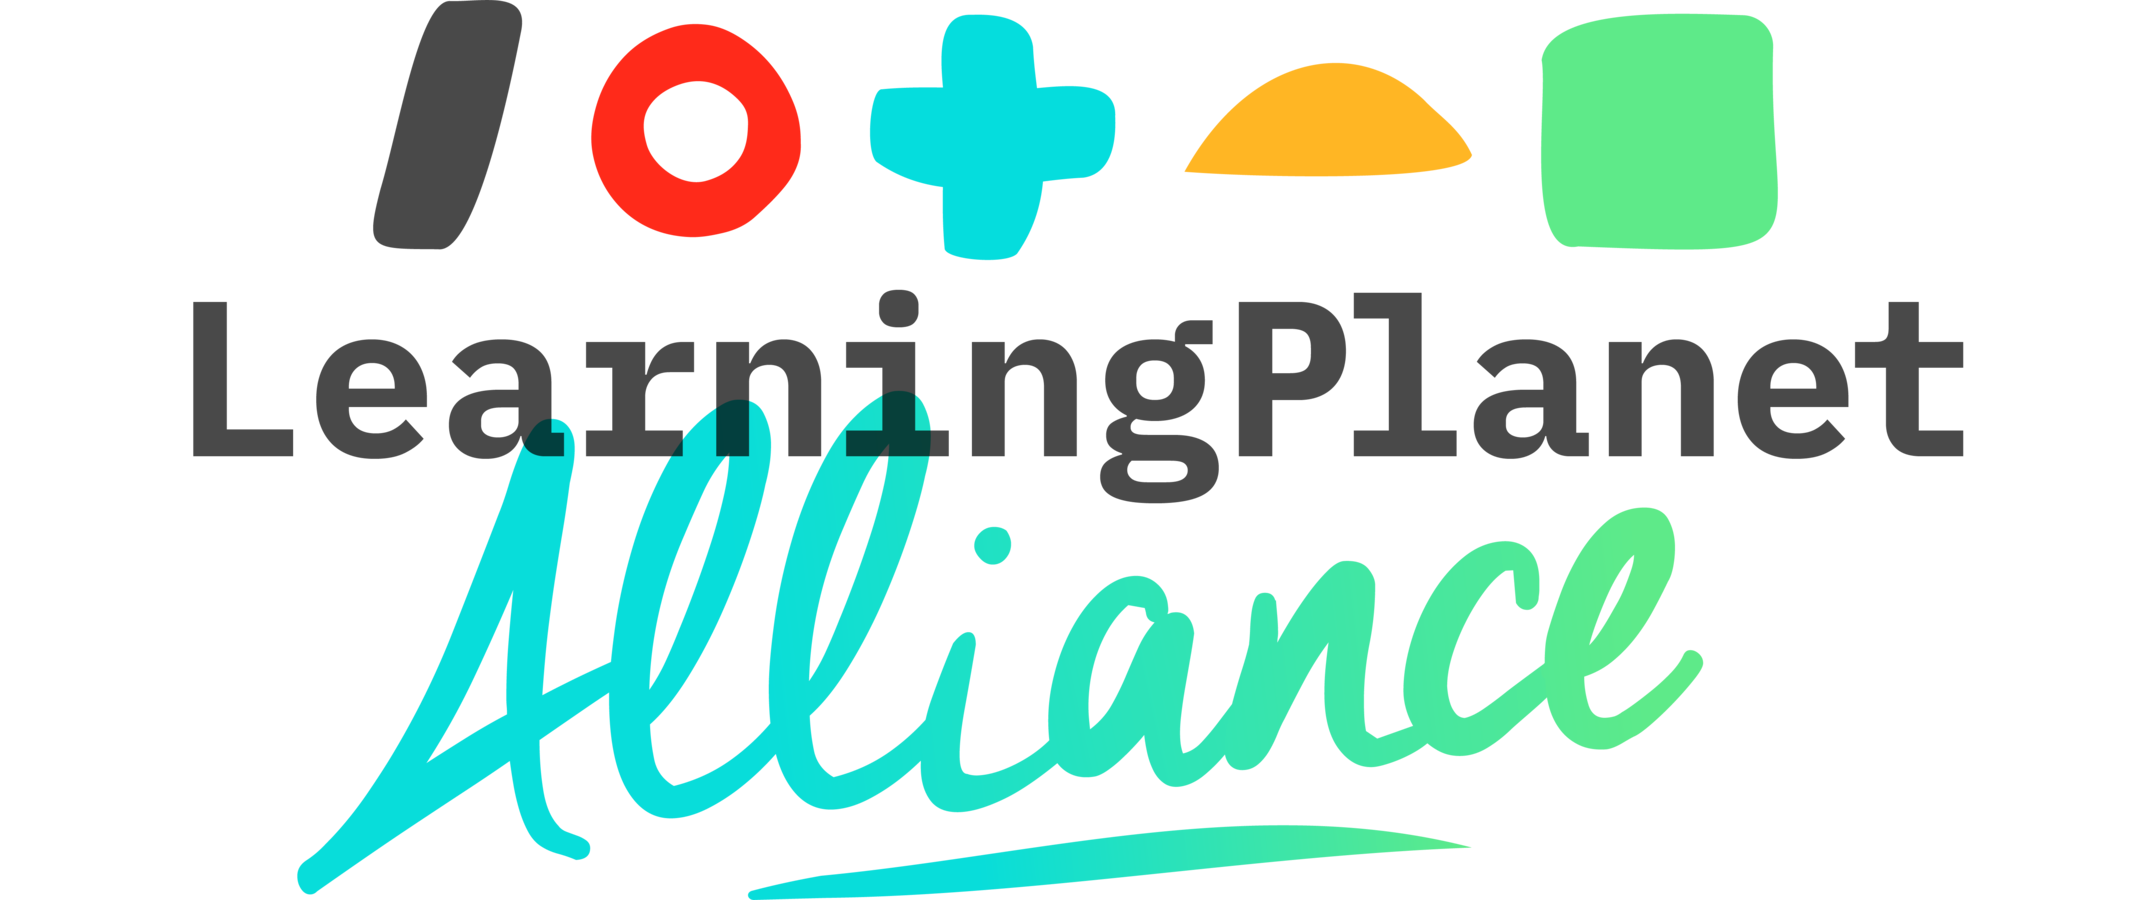 Learning planet alliance logo